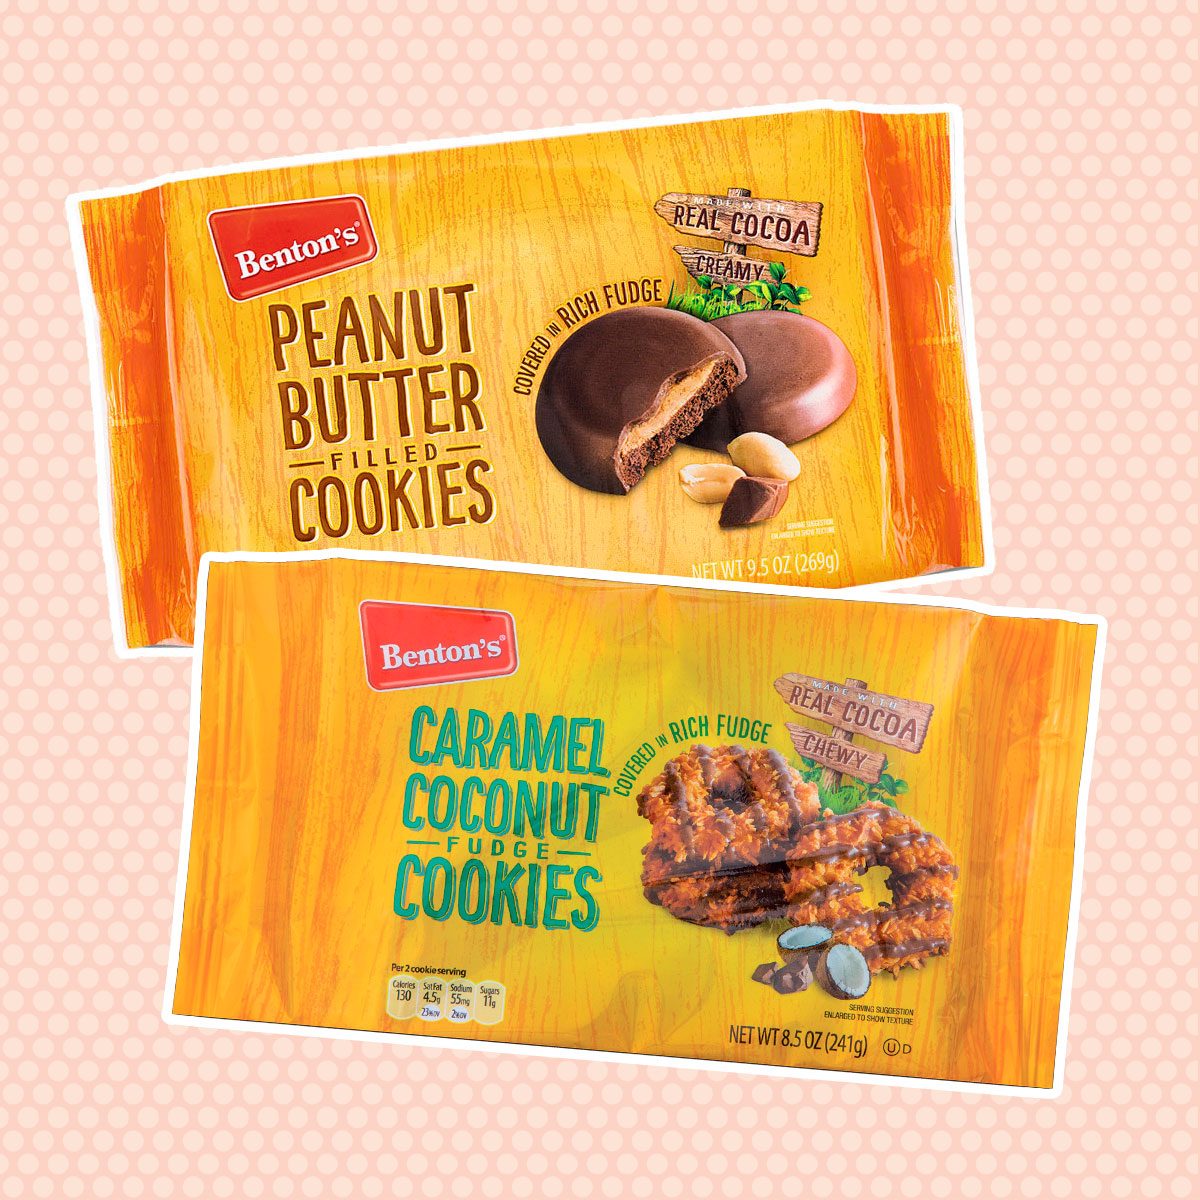 Benton's peanut butter and caramel coconut fudge cookies